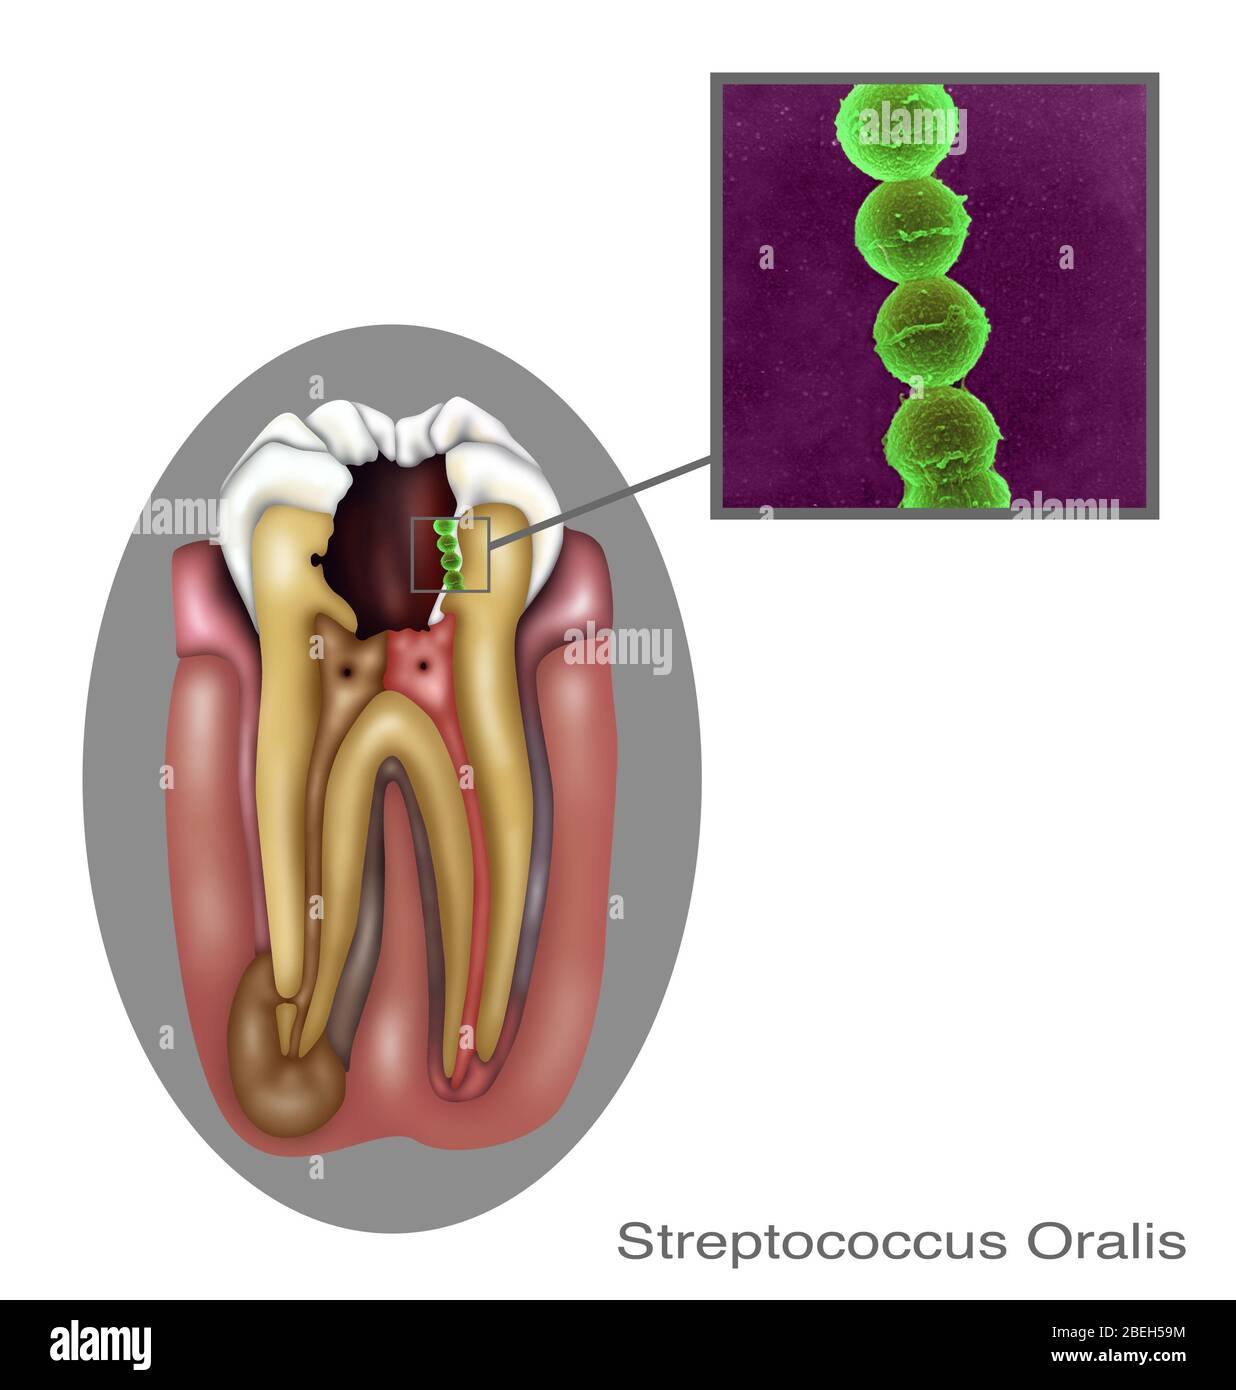 Oral Infection of Streptococcus Oralis Stock Photo